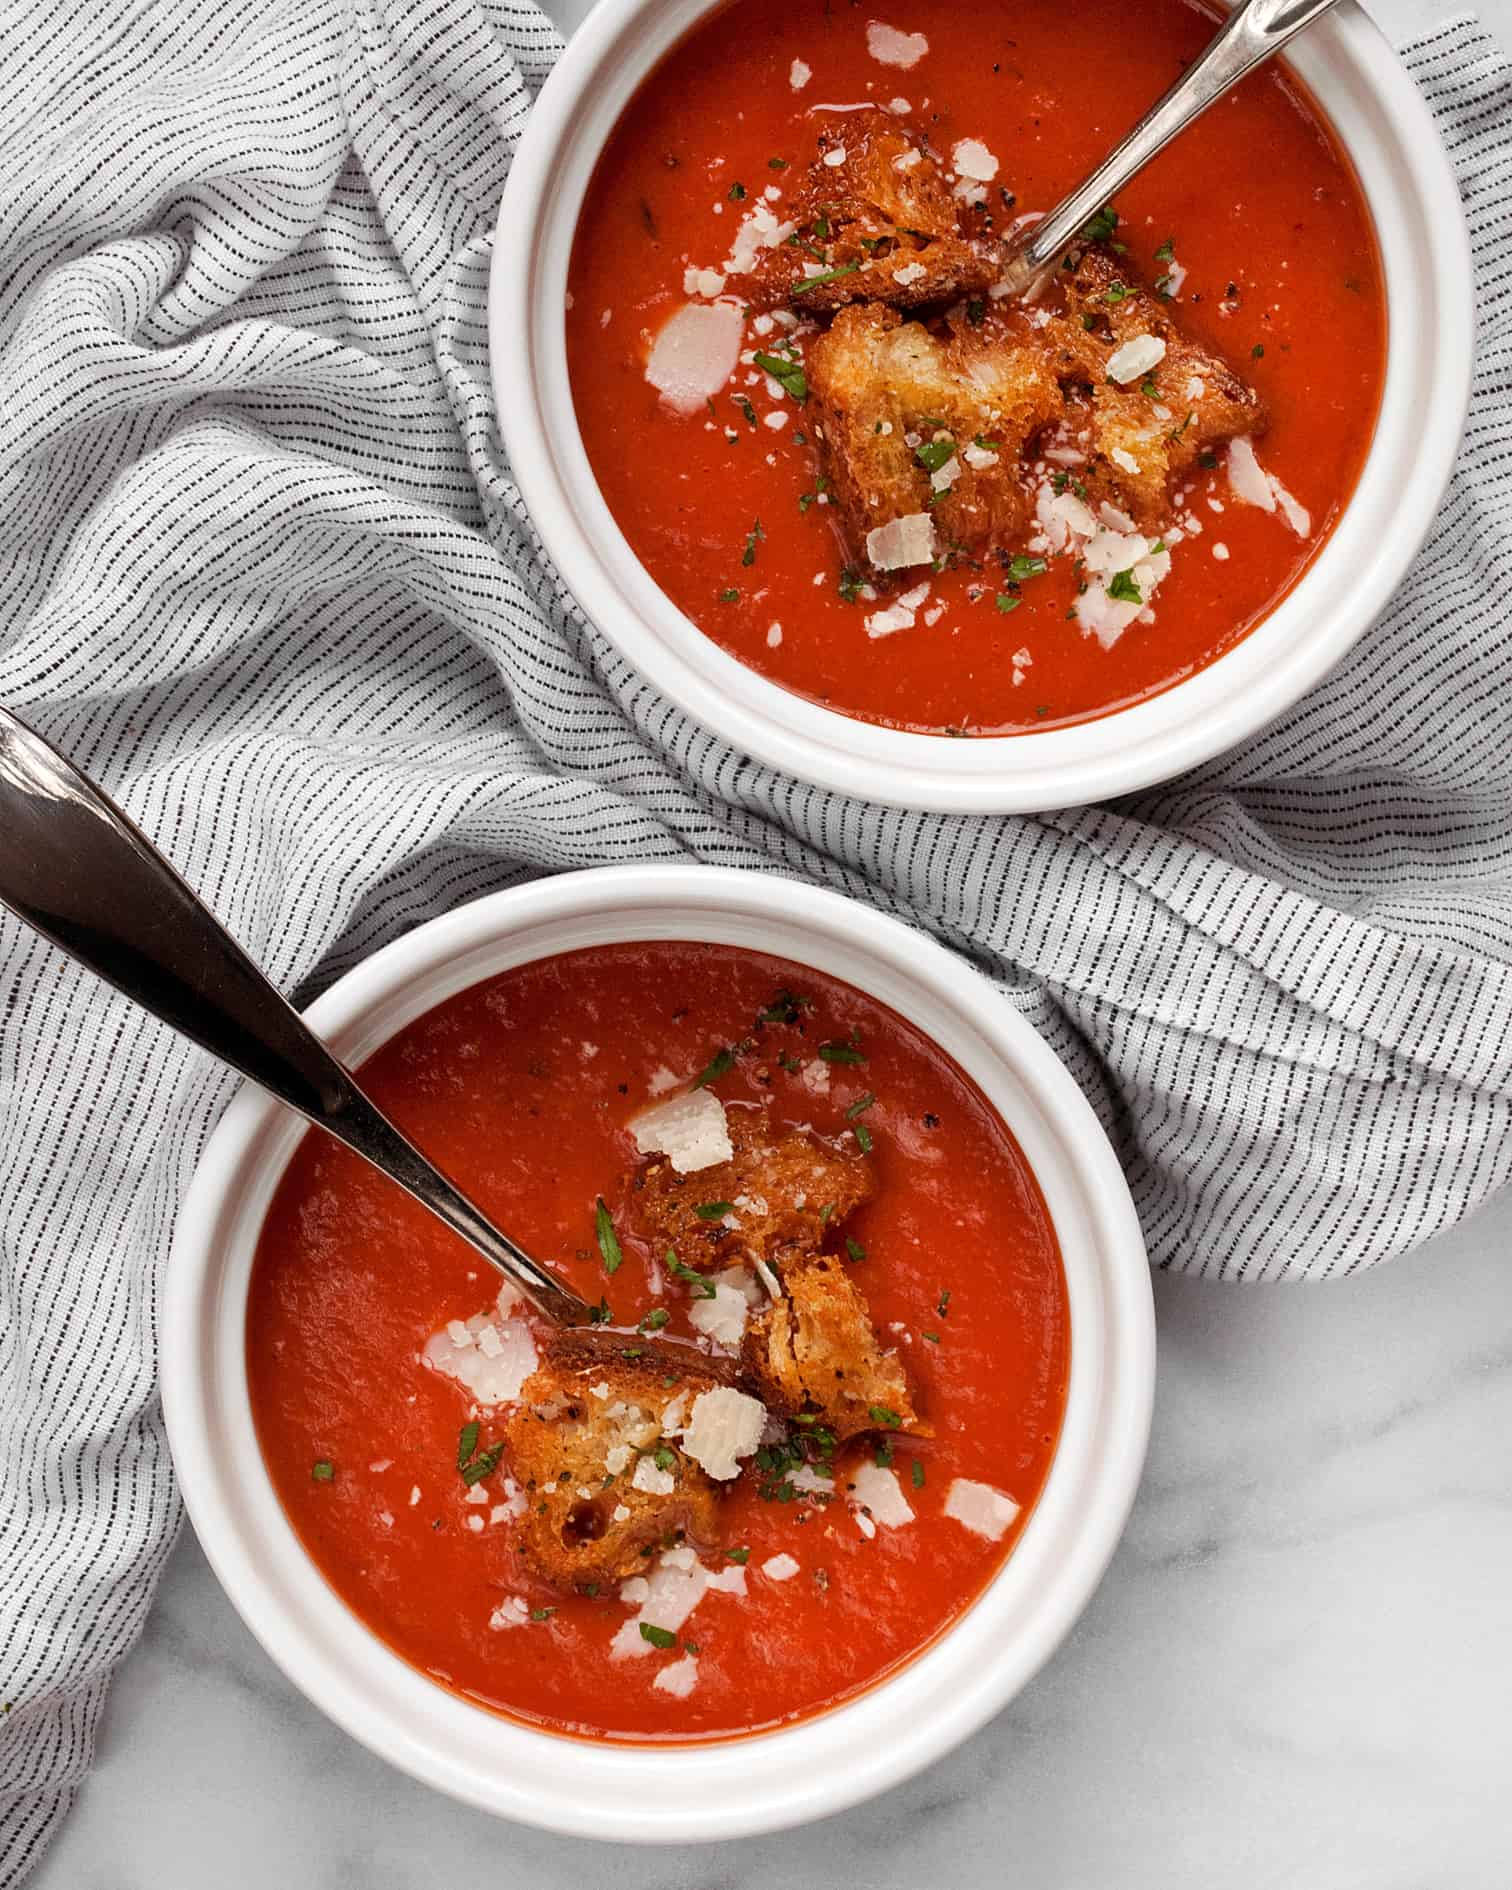 https://www.lastingredient.com/wp-content/uploads/2014/03/roasted-tomato-soup14.jpg